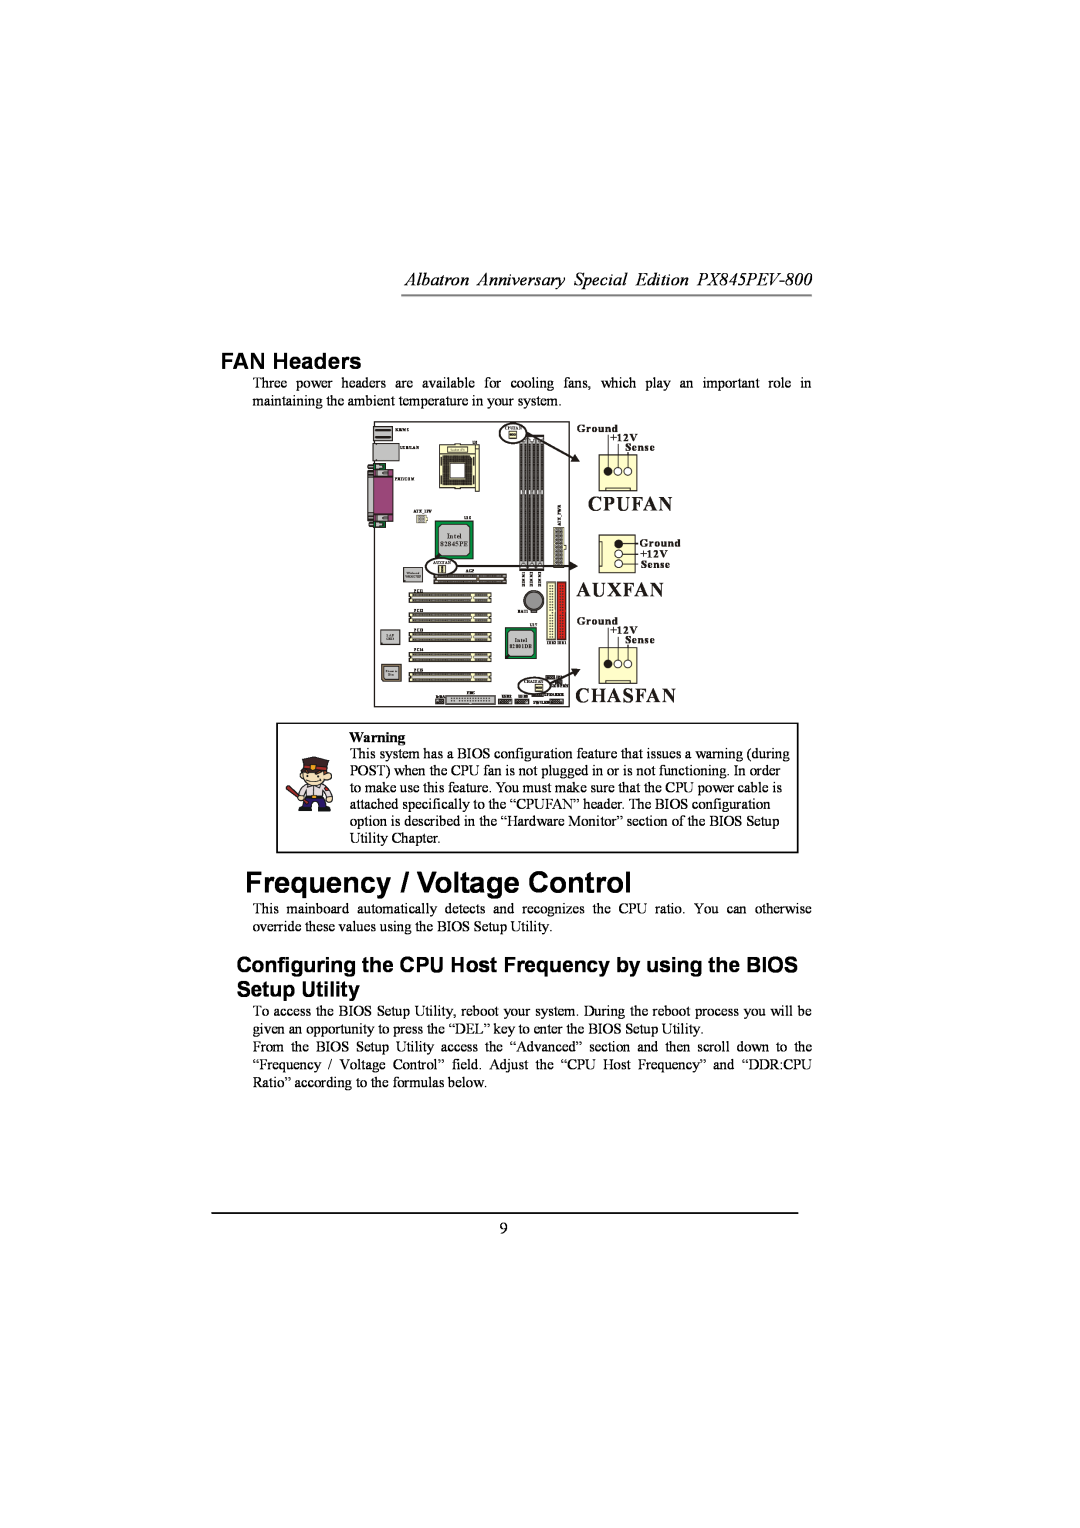 Albatron Technology PX845PEV-800 manual Frequency / Voltage Control, FAN Headers, Cpufan, Auxfan 